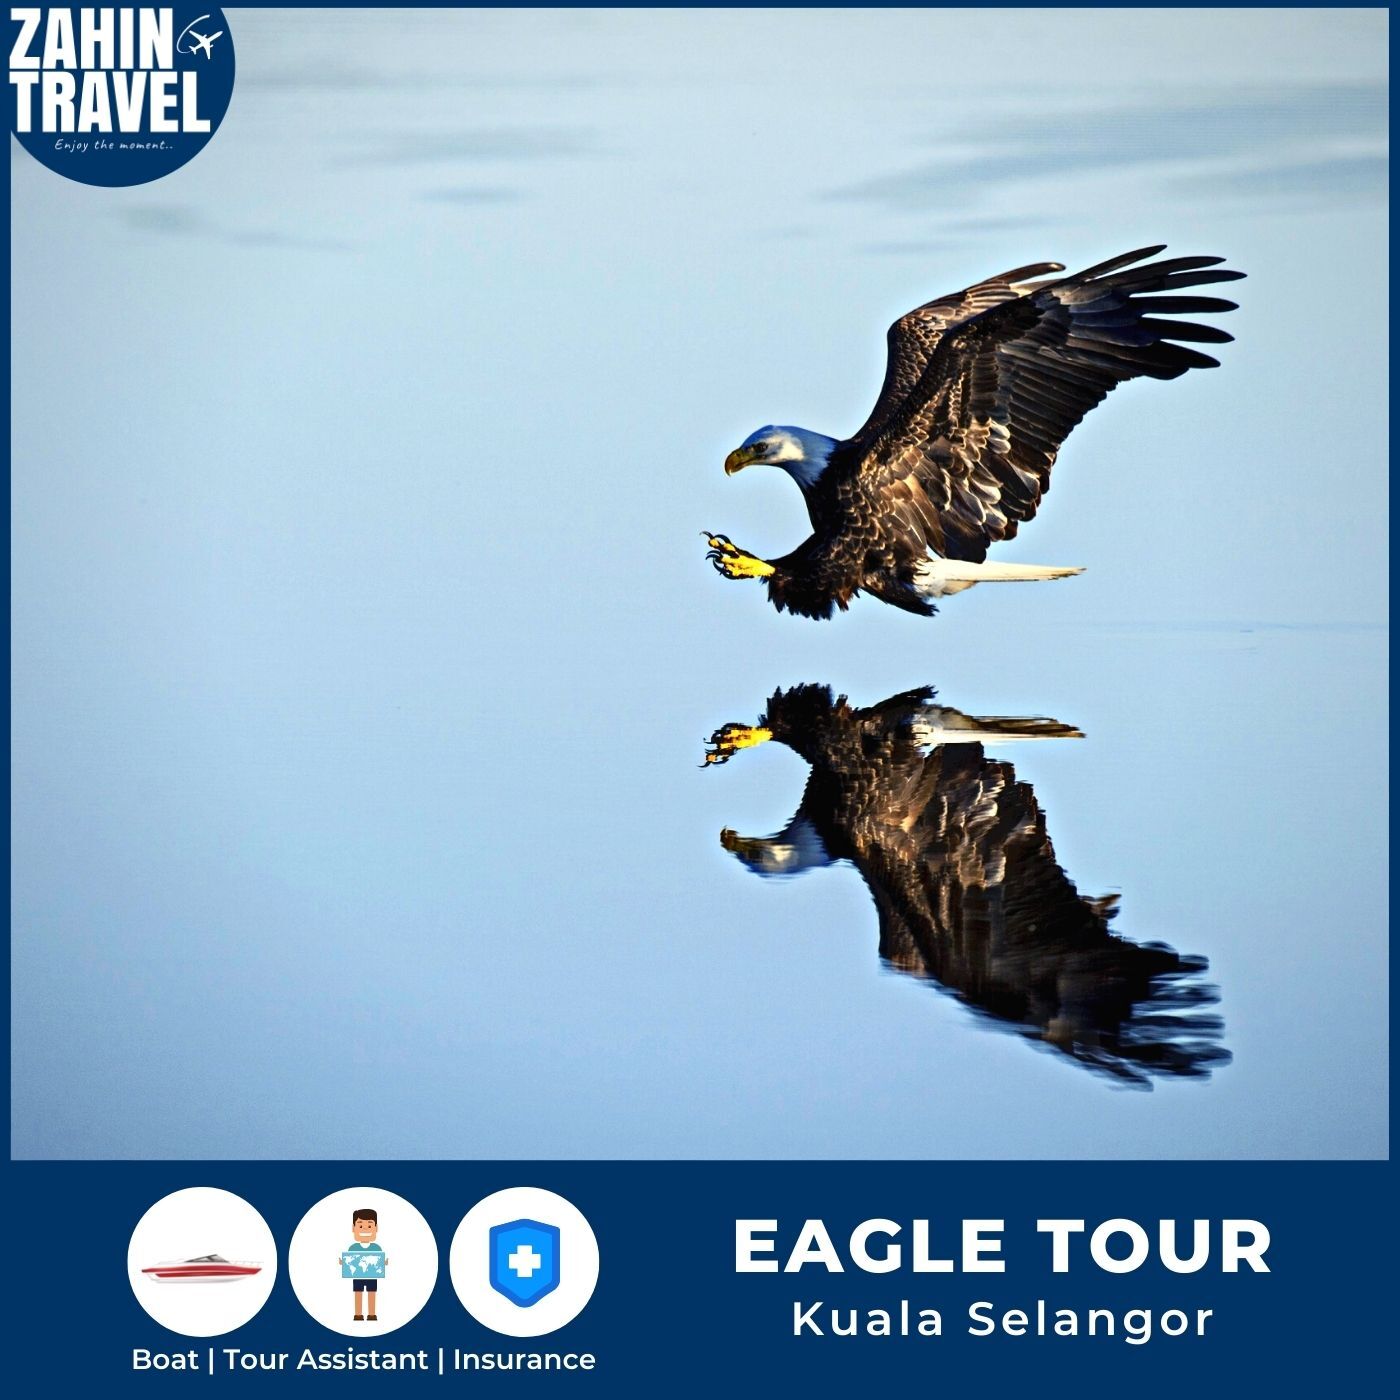 Pakej Percutian Eagle Tour Kuala Selangor